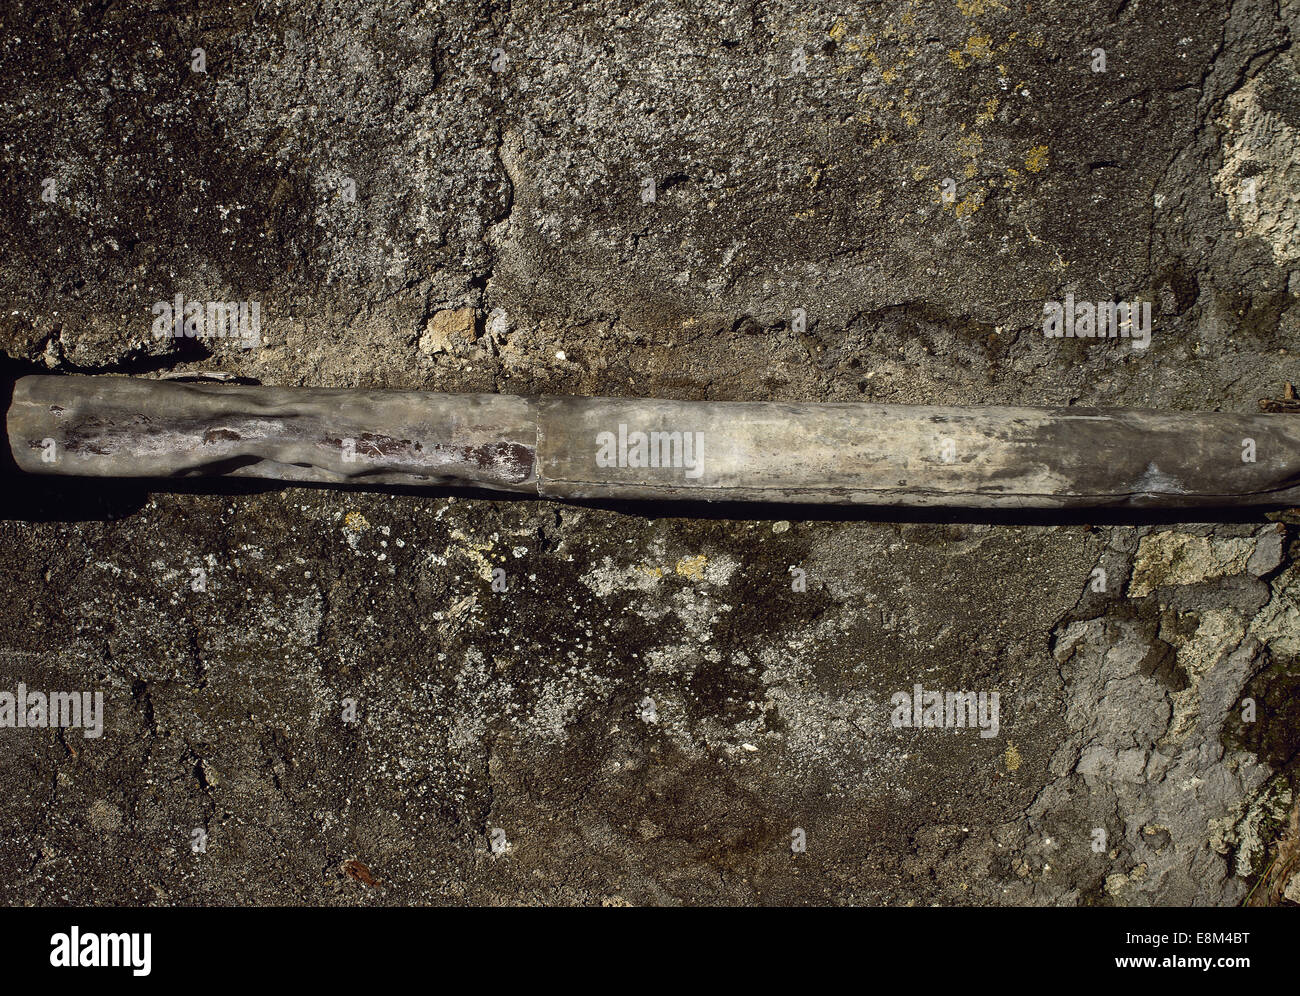 Italy. Pompeii. An original Roman lead pipe. Stock Photo